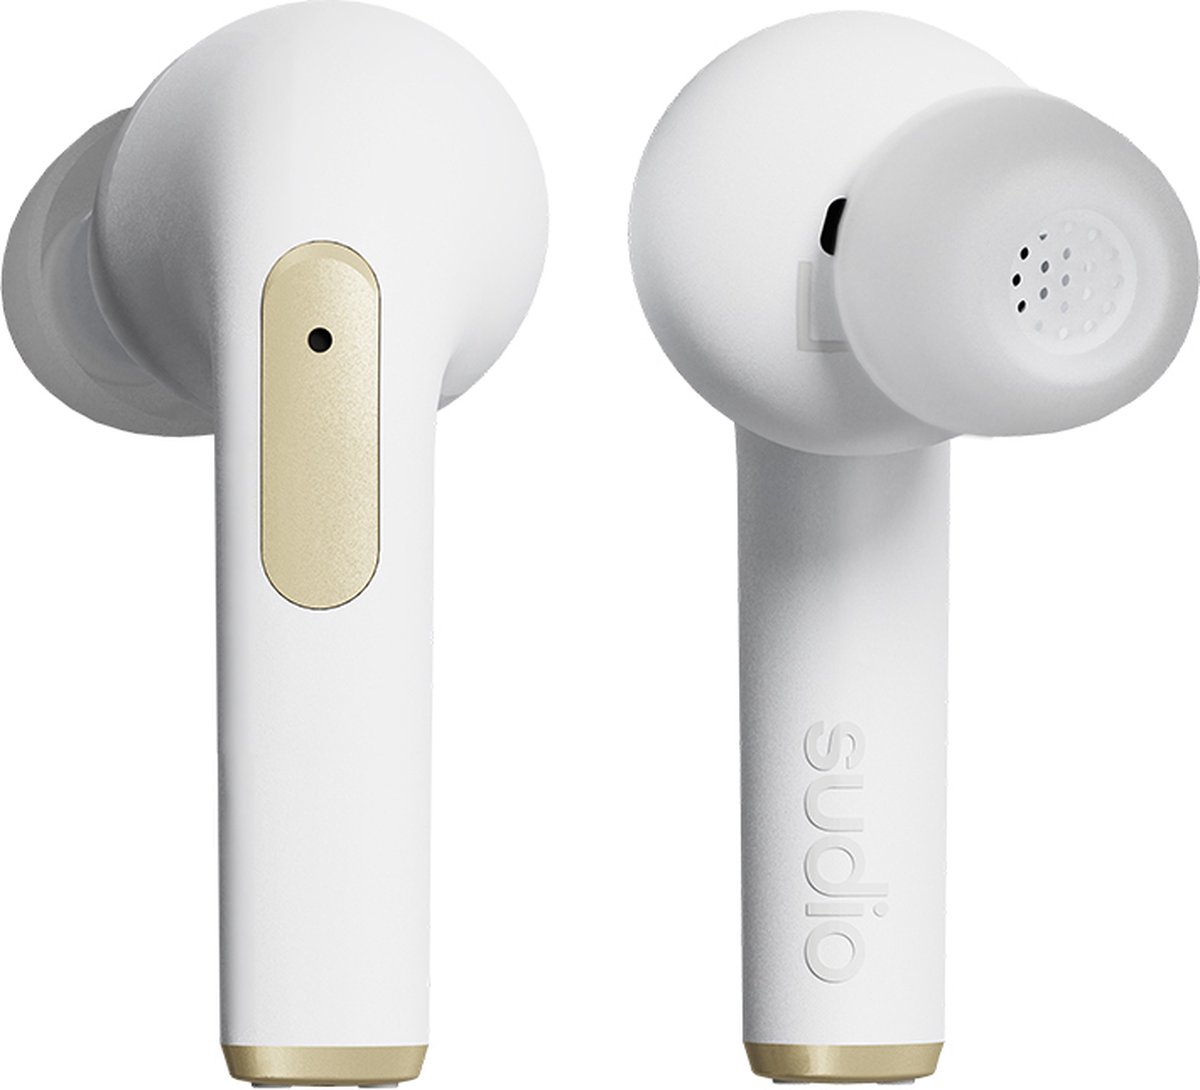 Sudio N2 Pro in-ear true wireless earphones - draadloze oordopjes - met active noice cancellation (ANC) - wit